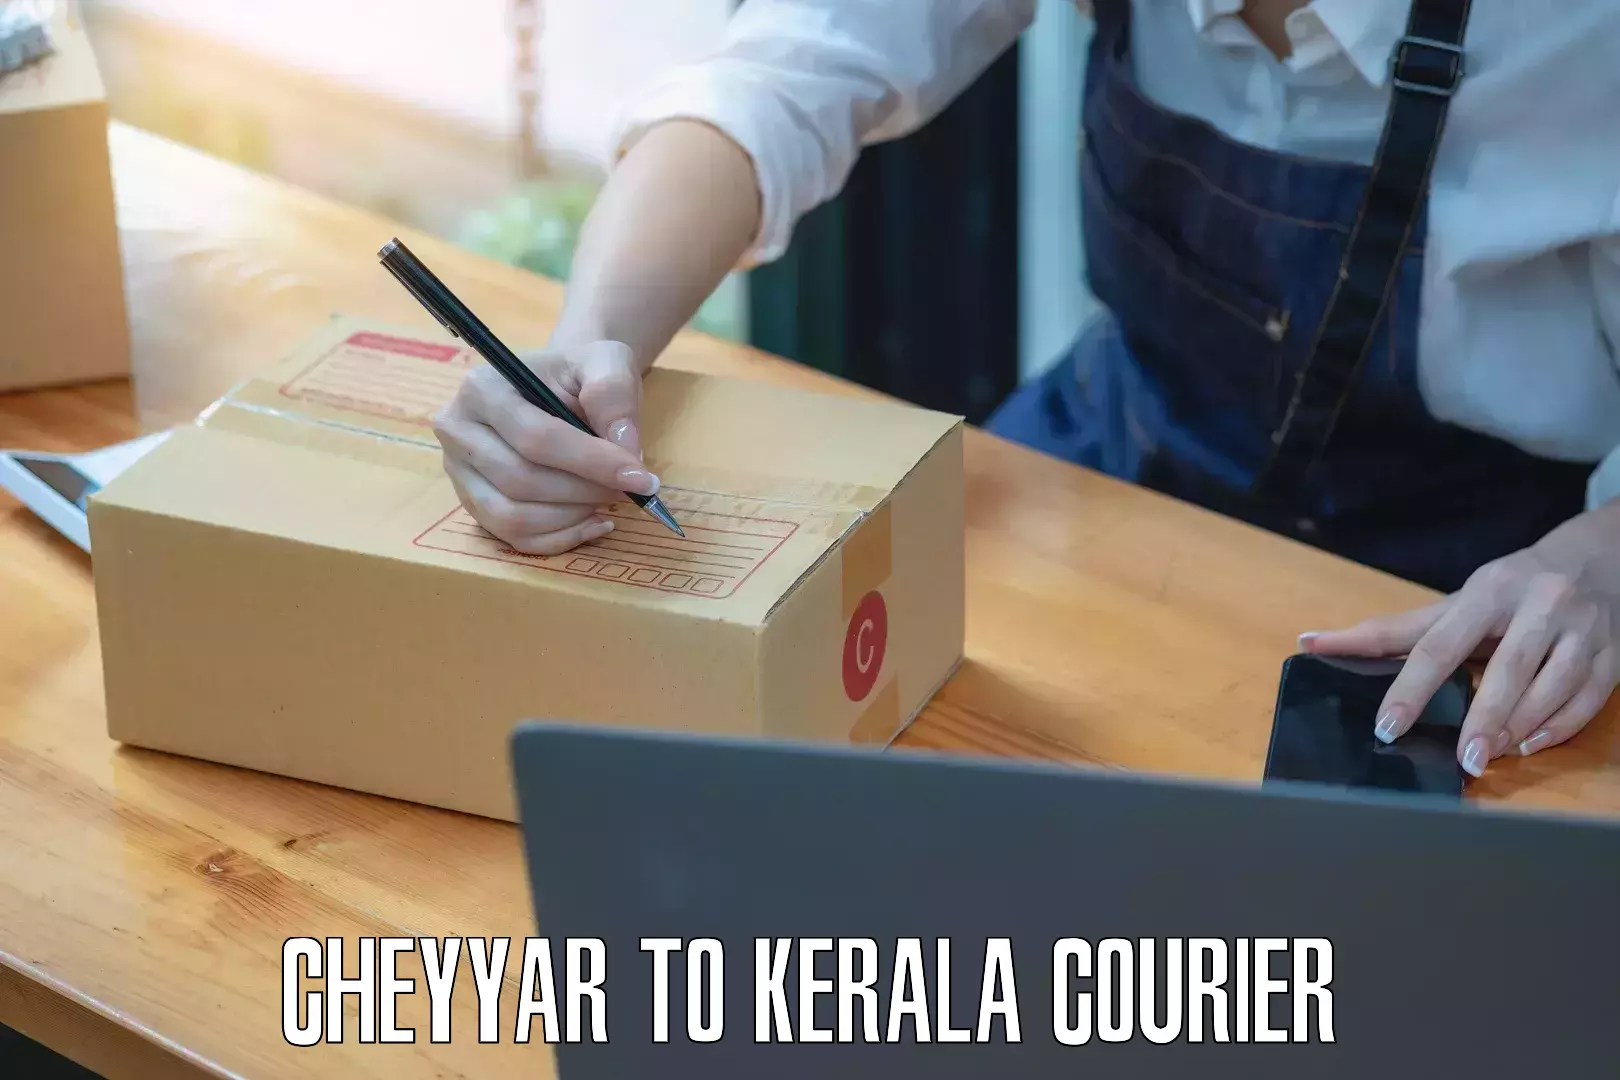 Courier service comparison Cheyyar to Kuchi